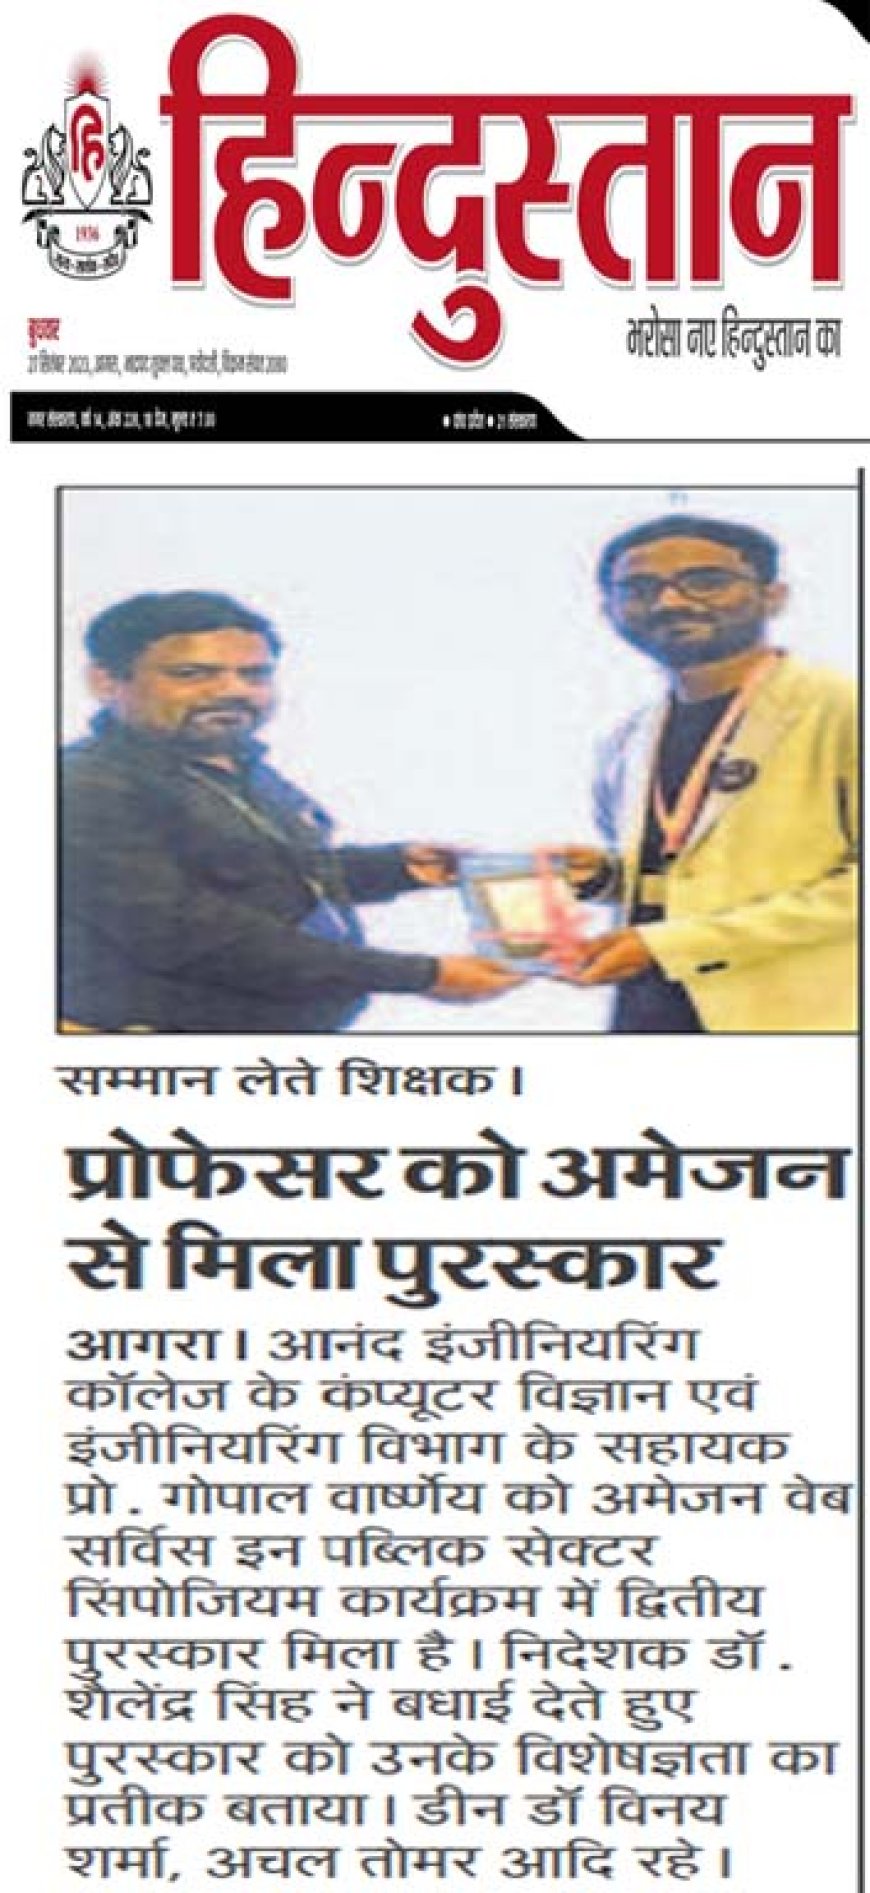 Mr. Gopalji Varshneya, Assistant Professor of AEC honoured with an award by Amazon